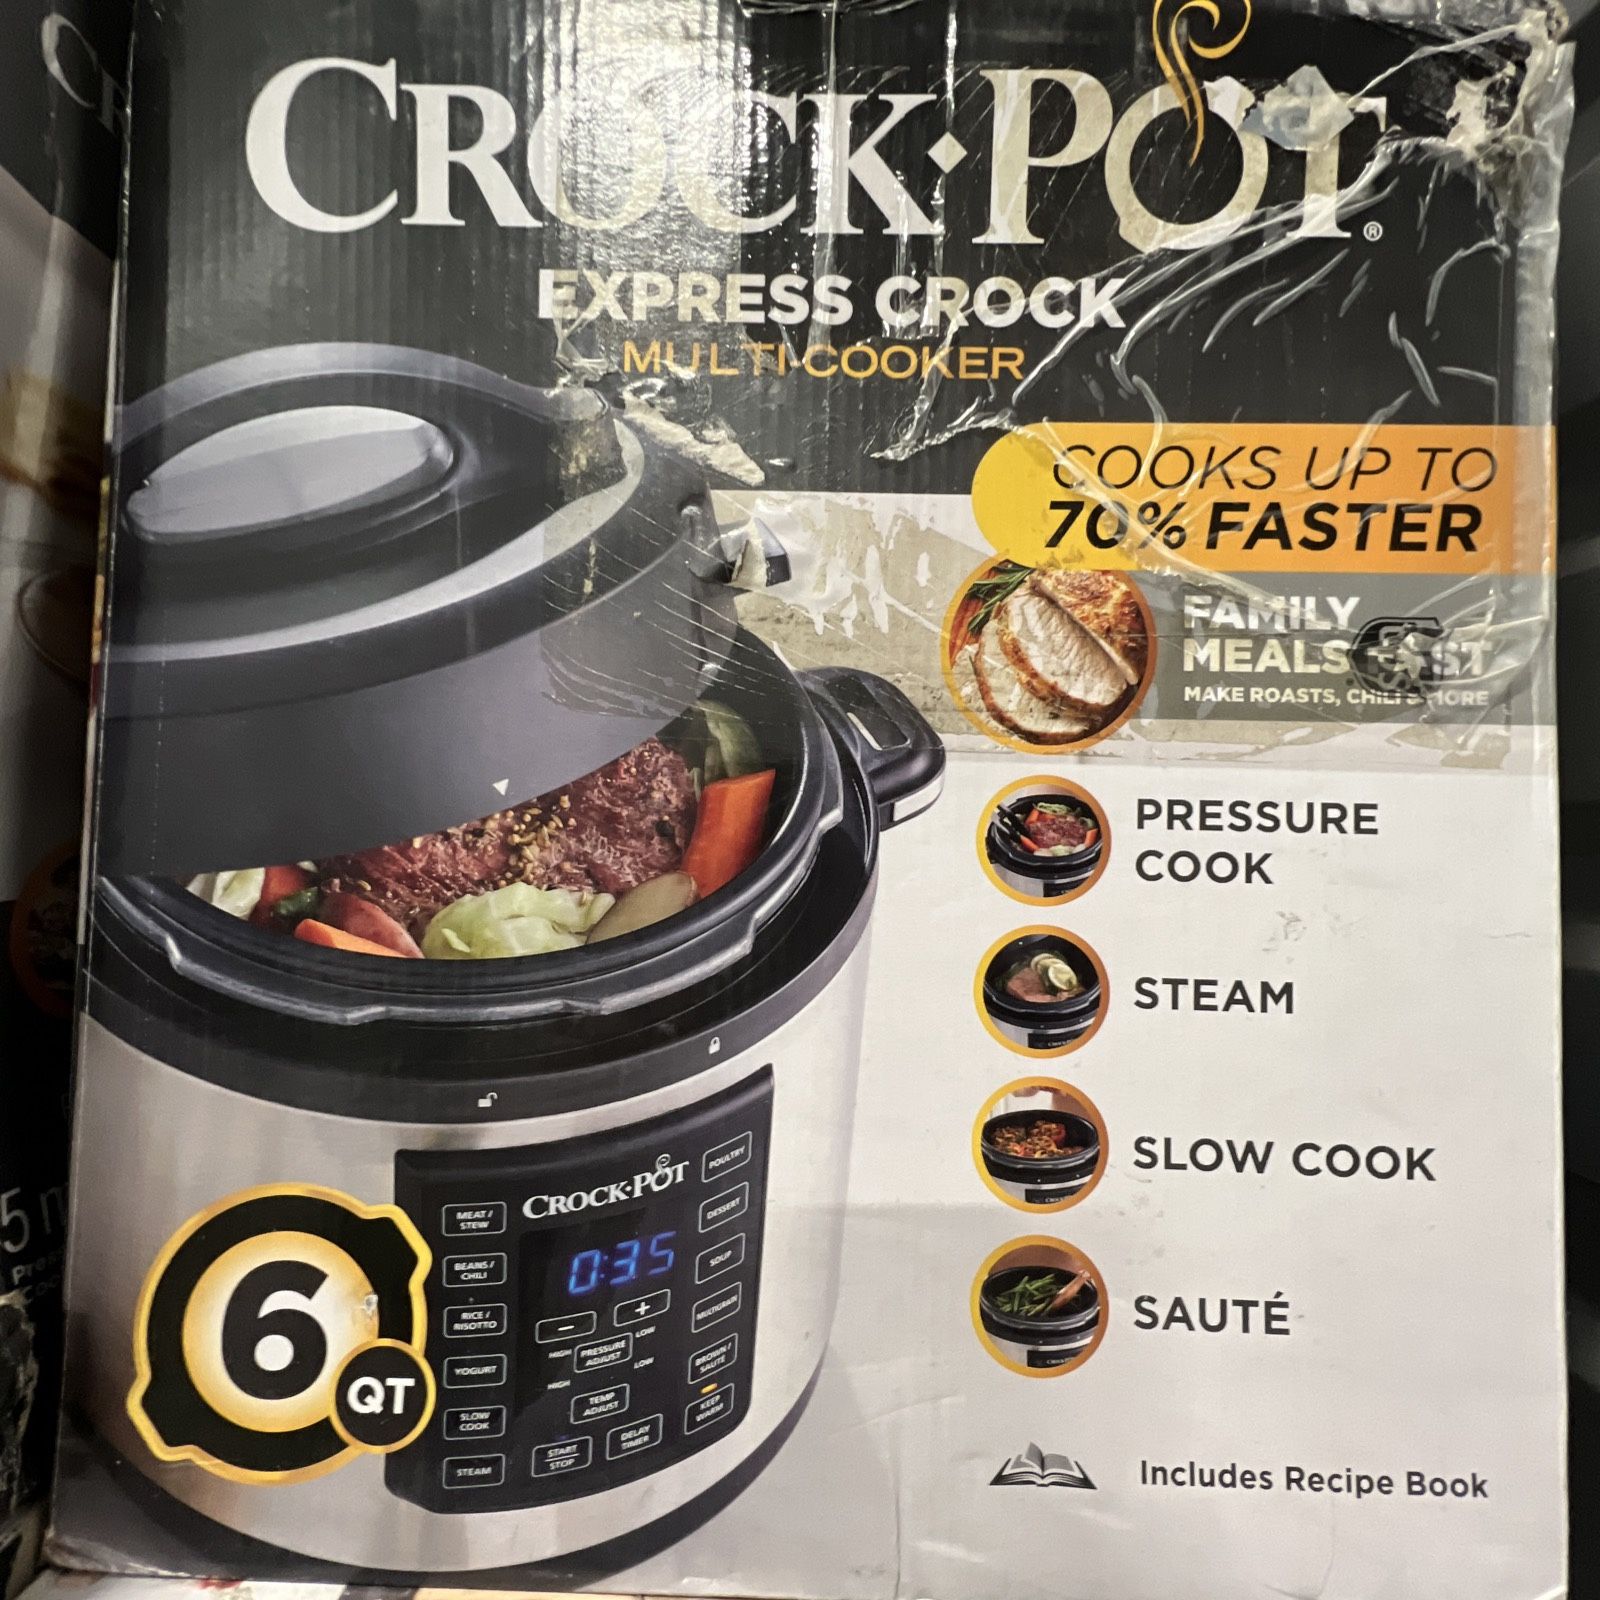 Crock pot 6 quart multi function cooker